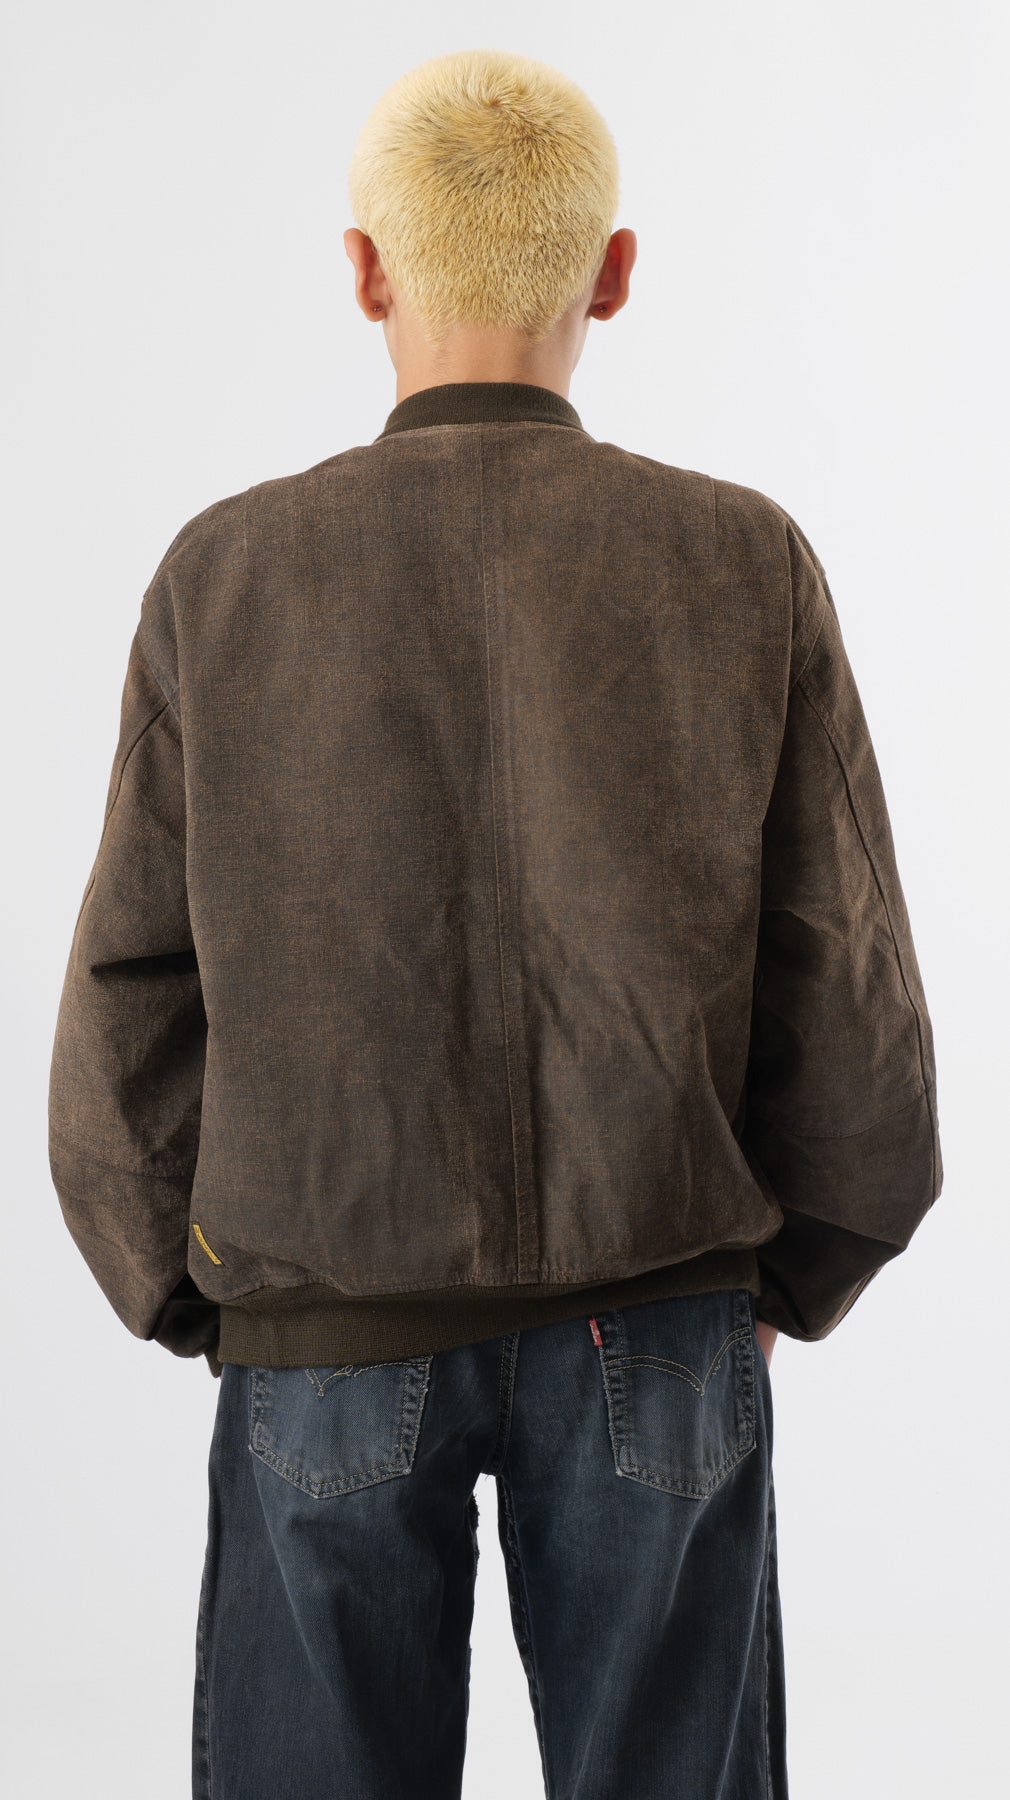 Armani 1990s Leather Bomber jacket (L)